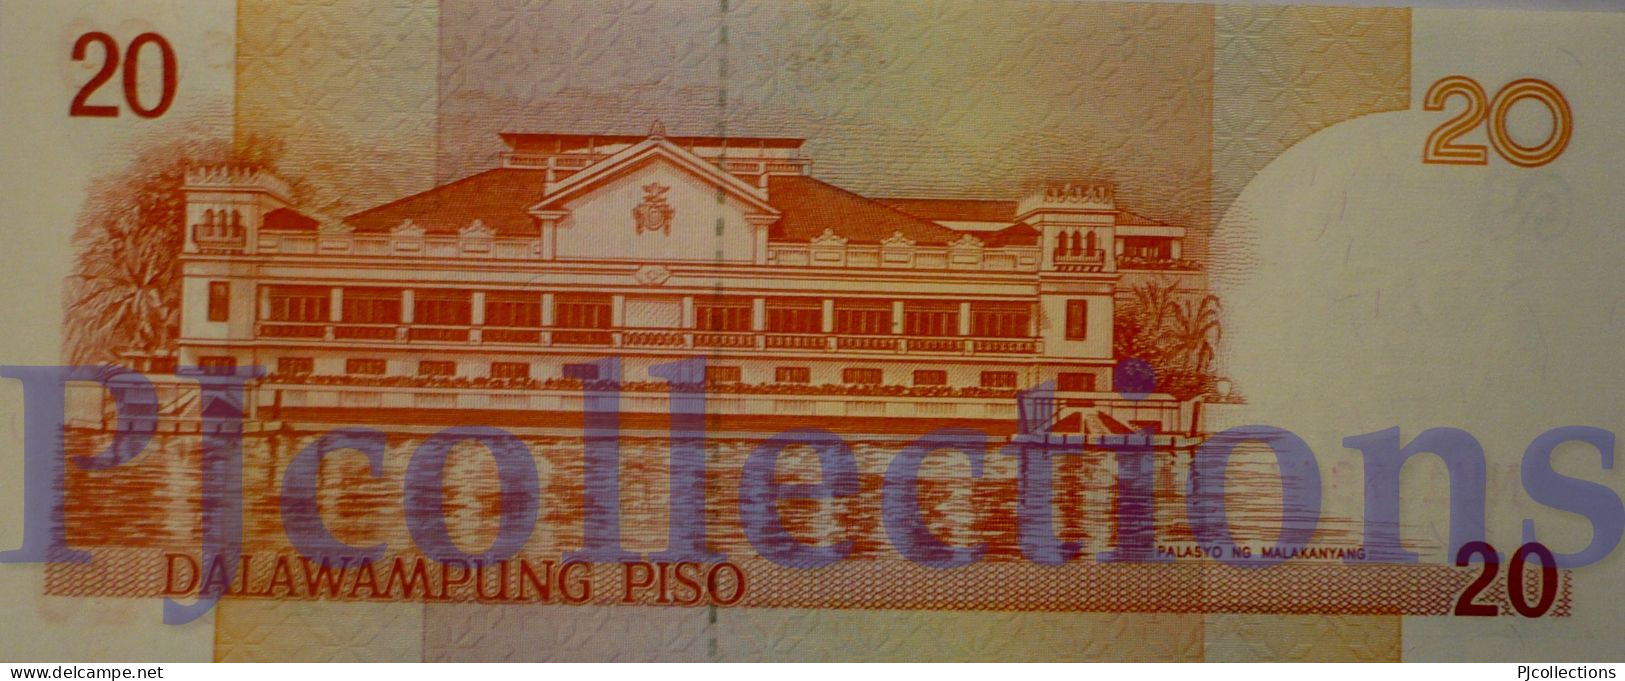 PHILIPPINES 20 PISO 1997 PICK 182a UNC - Philippines